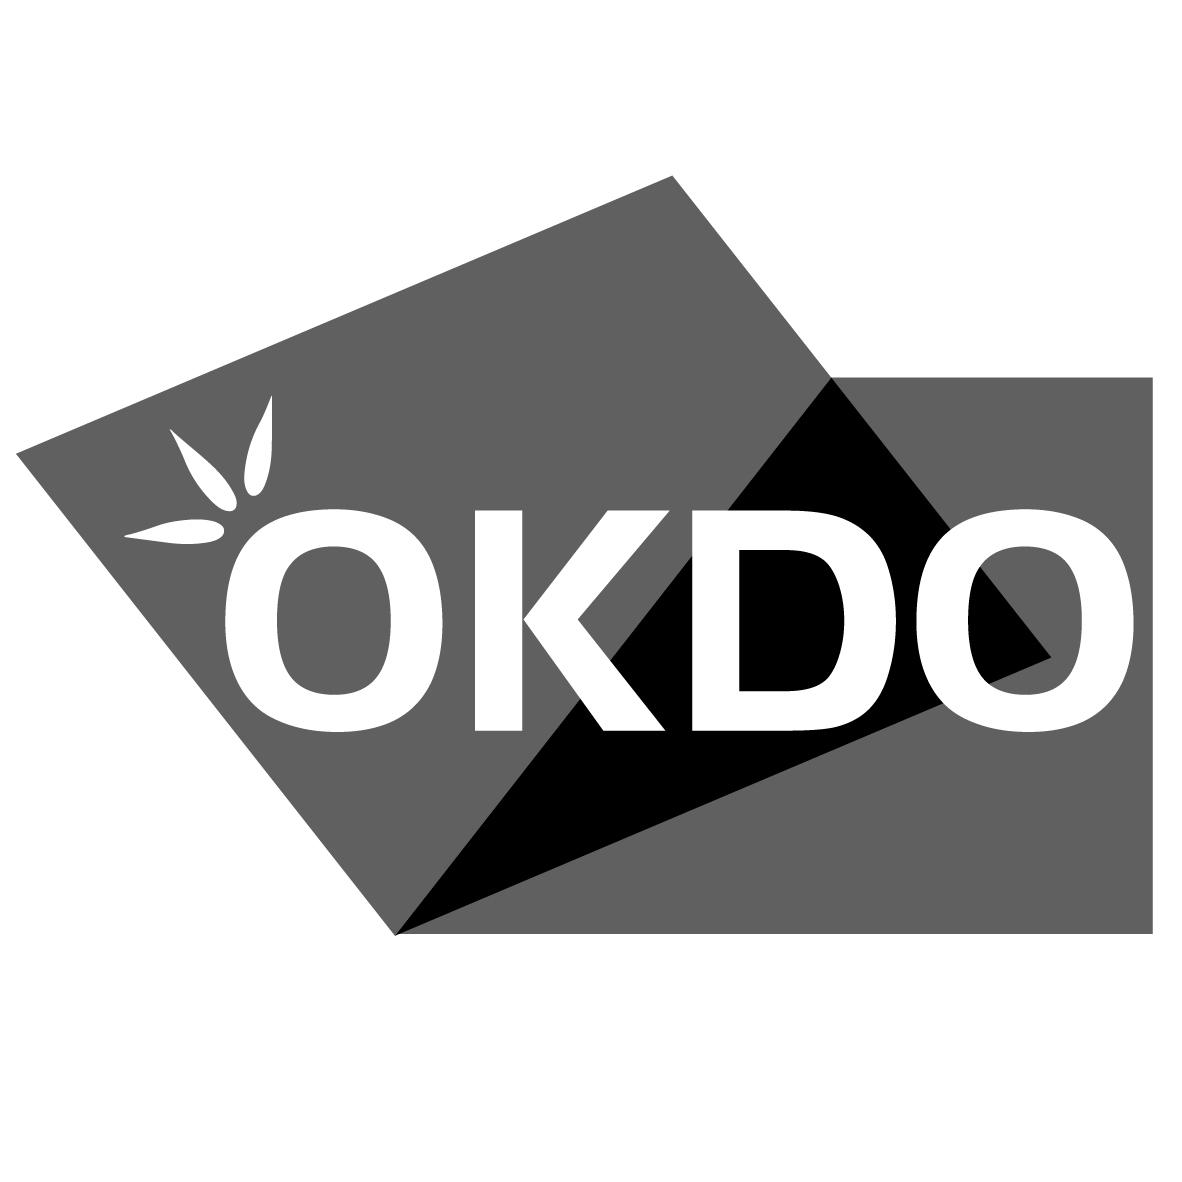 20类-家具OKDO商标转让